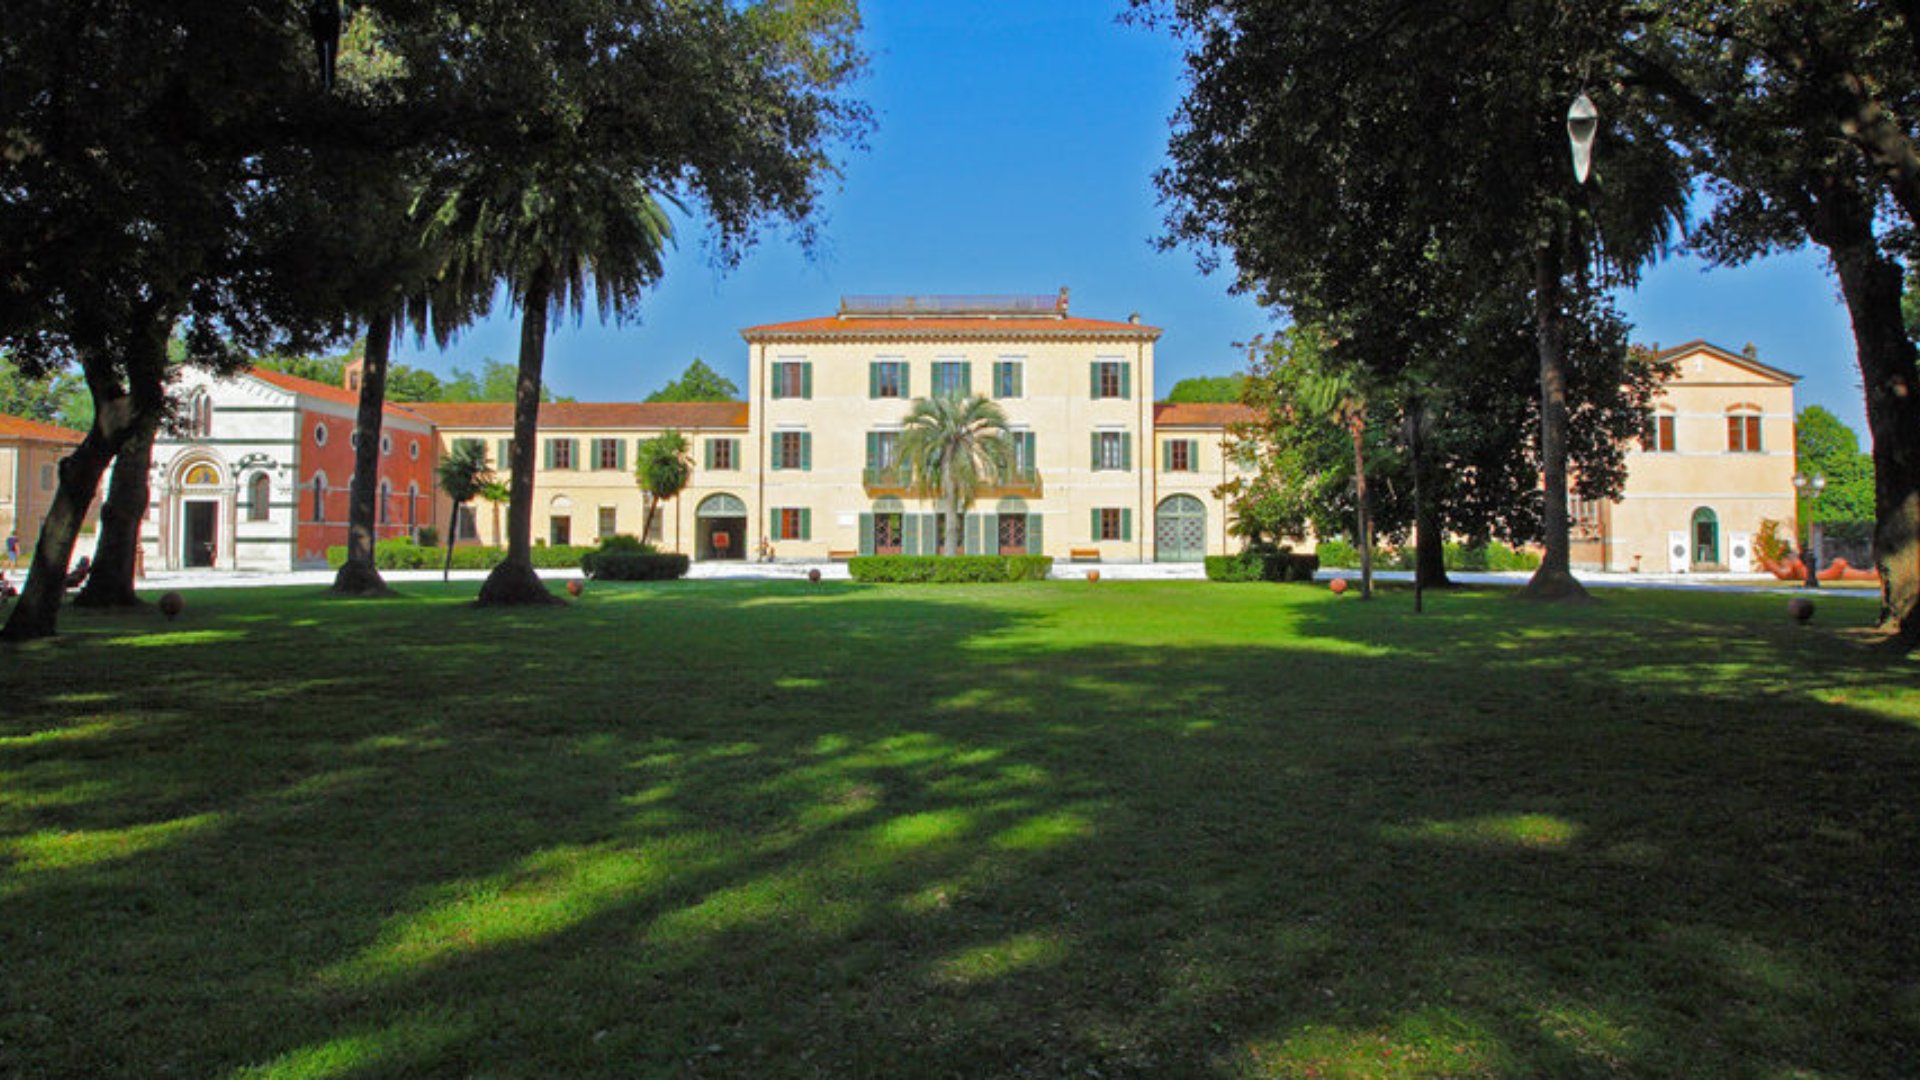 Villa Borbone Viareggio